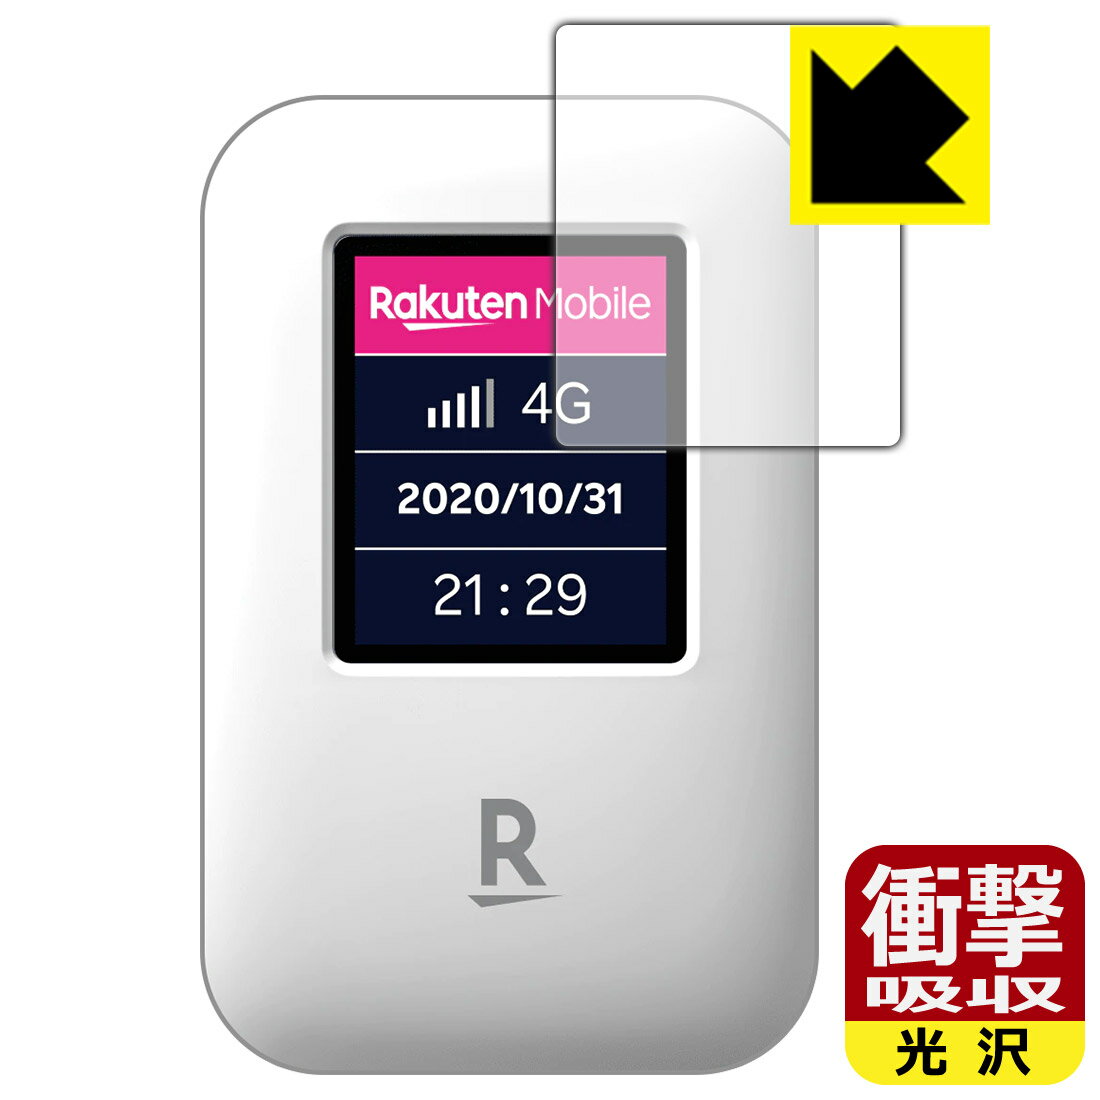 衝撃吸収【光沢】保護フィルム Rakuten WiFi Pocket 日本製 自社製造直販